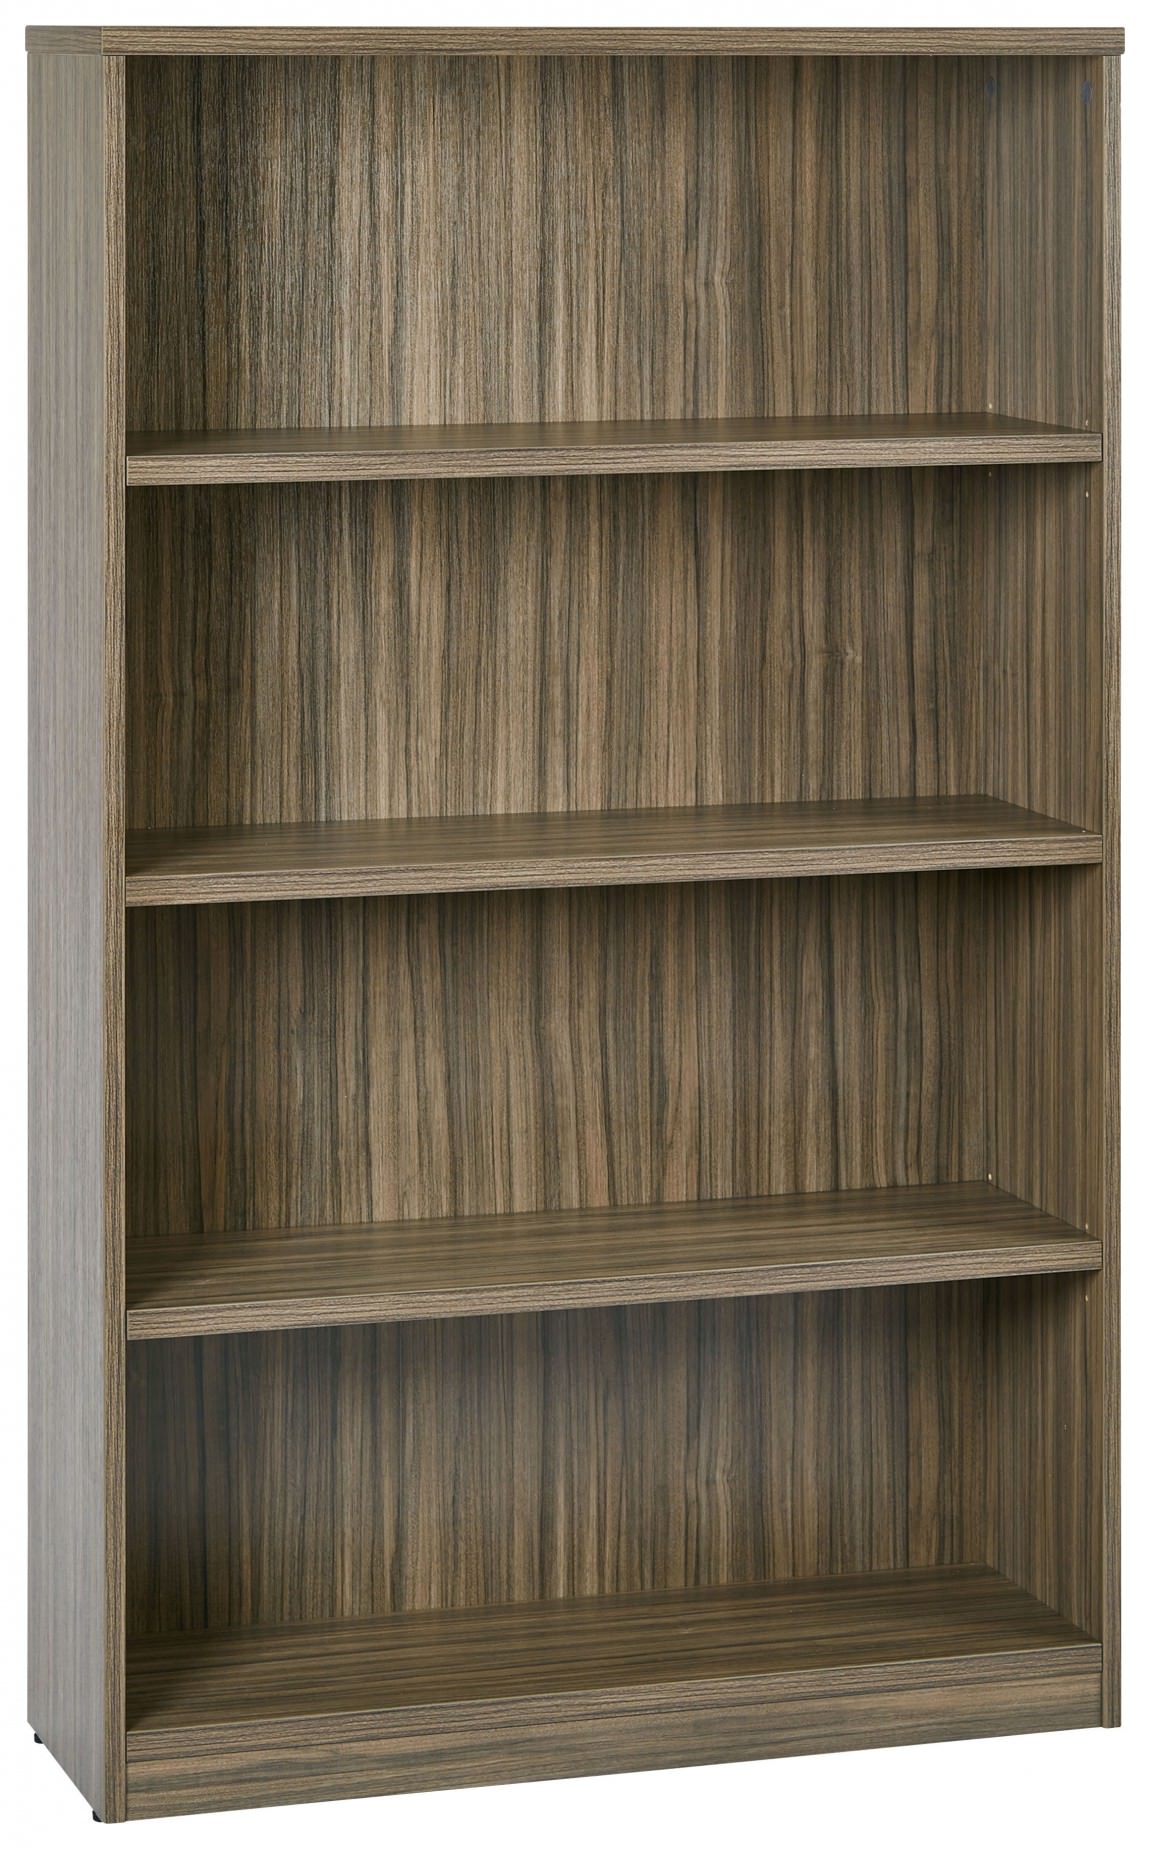 https://madisonliquidators.com/images/p/1150/20616-4-shelf-bookcase-60-tall-1.jpg